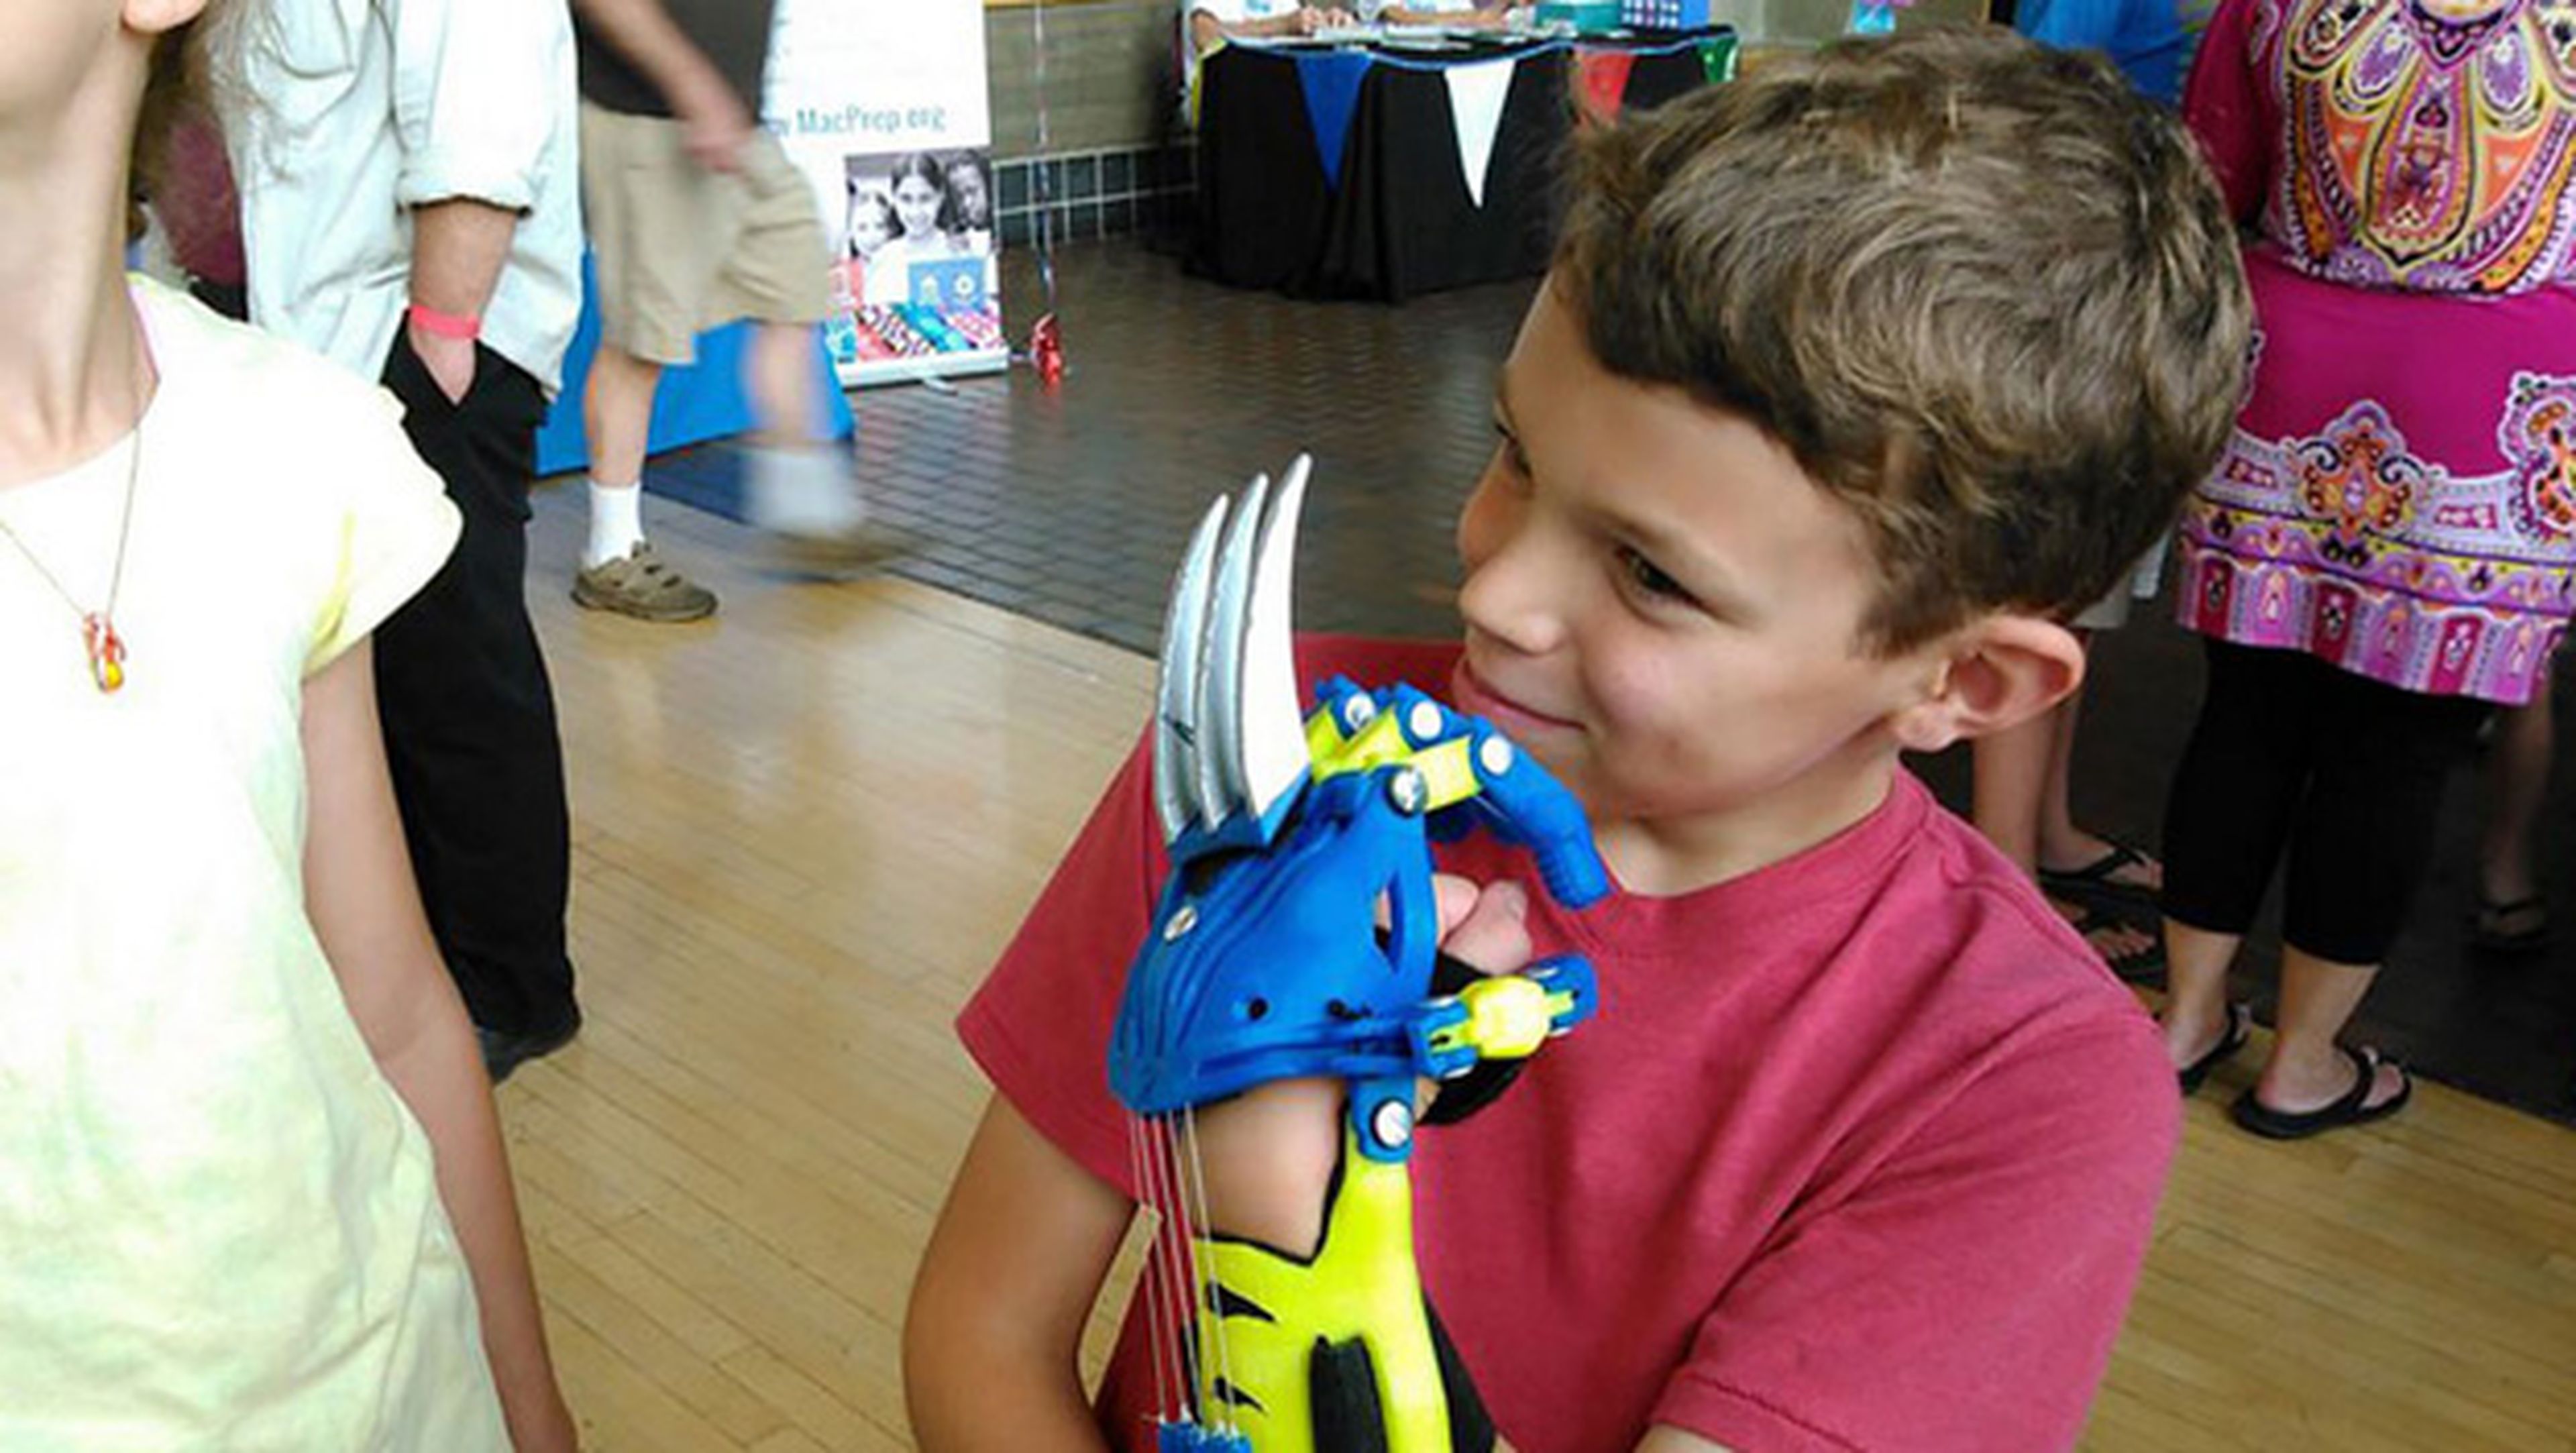 Ingenieros imprimen en 3D prótesis niños superhéroes